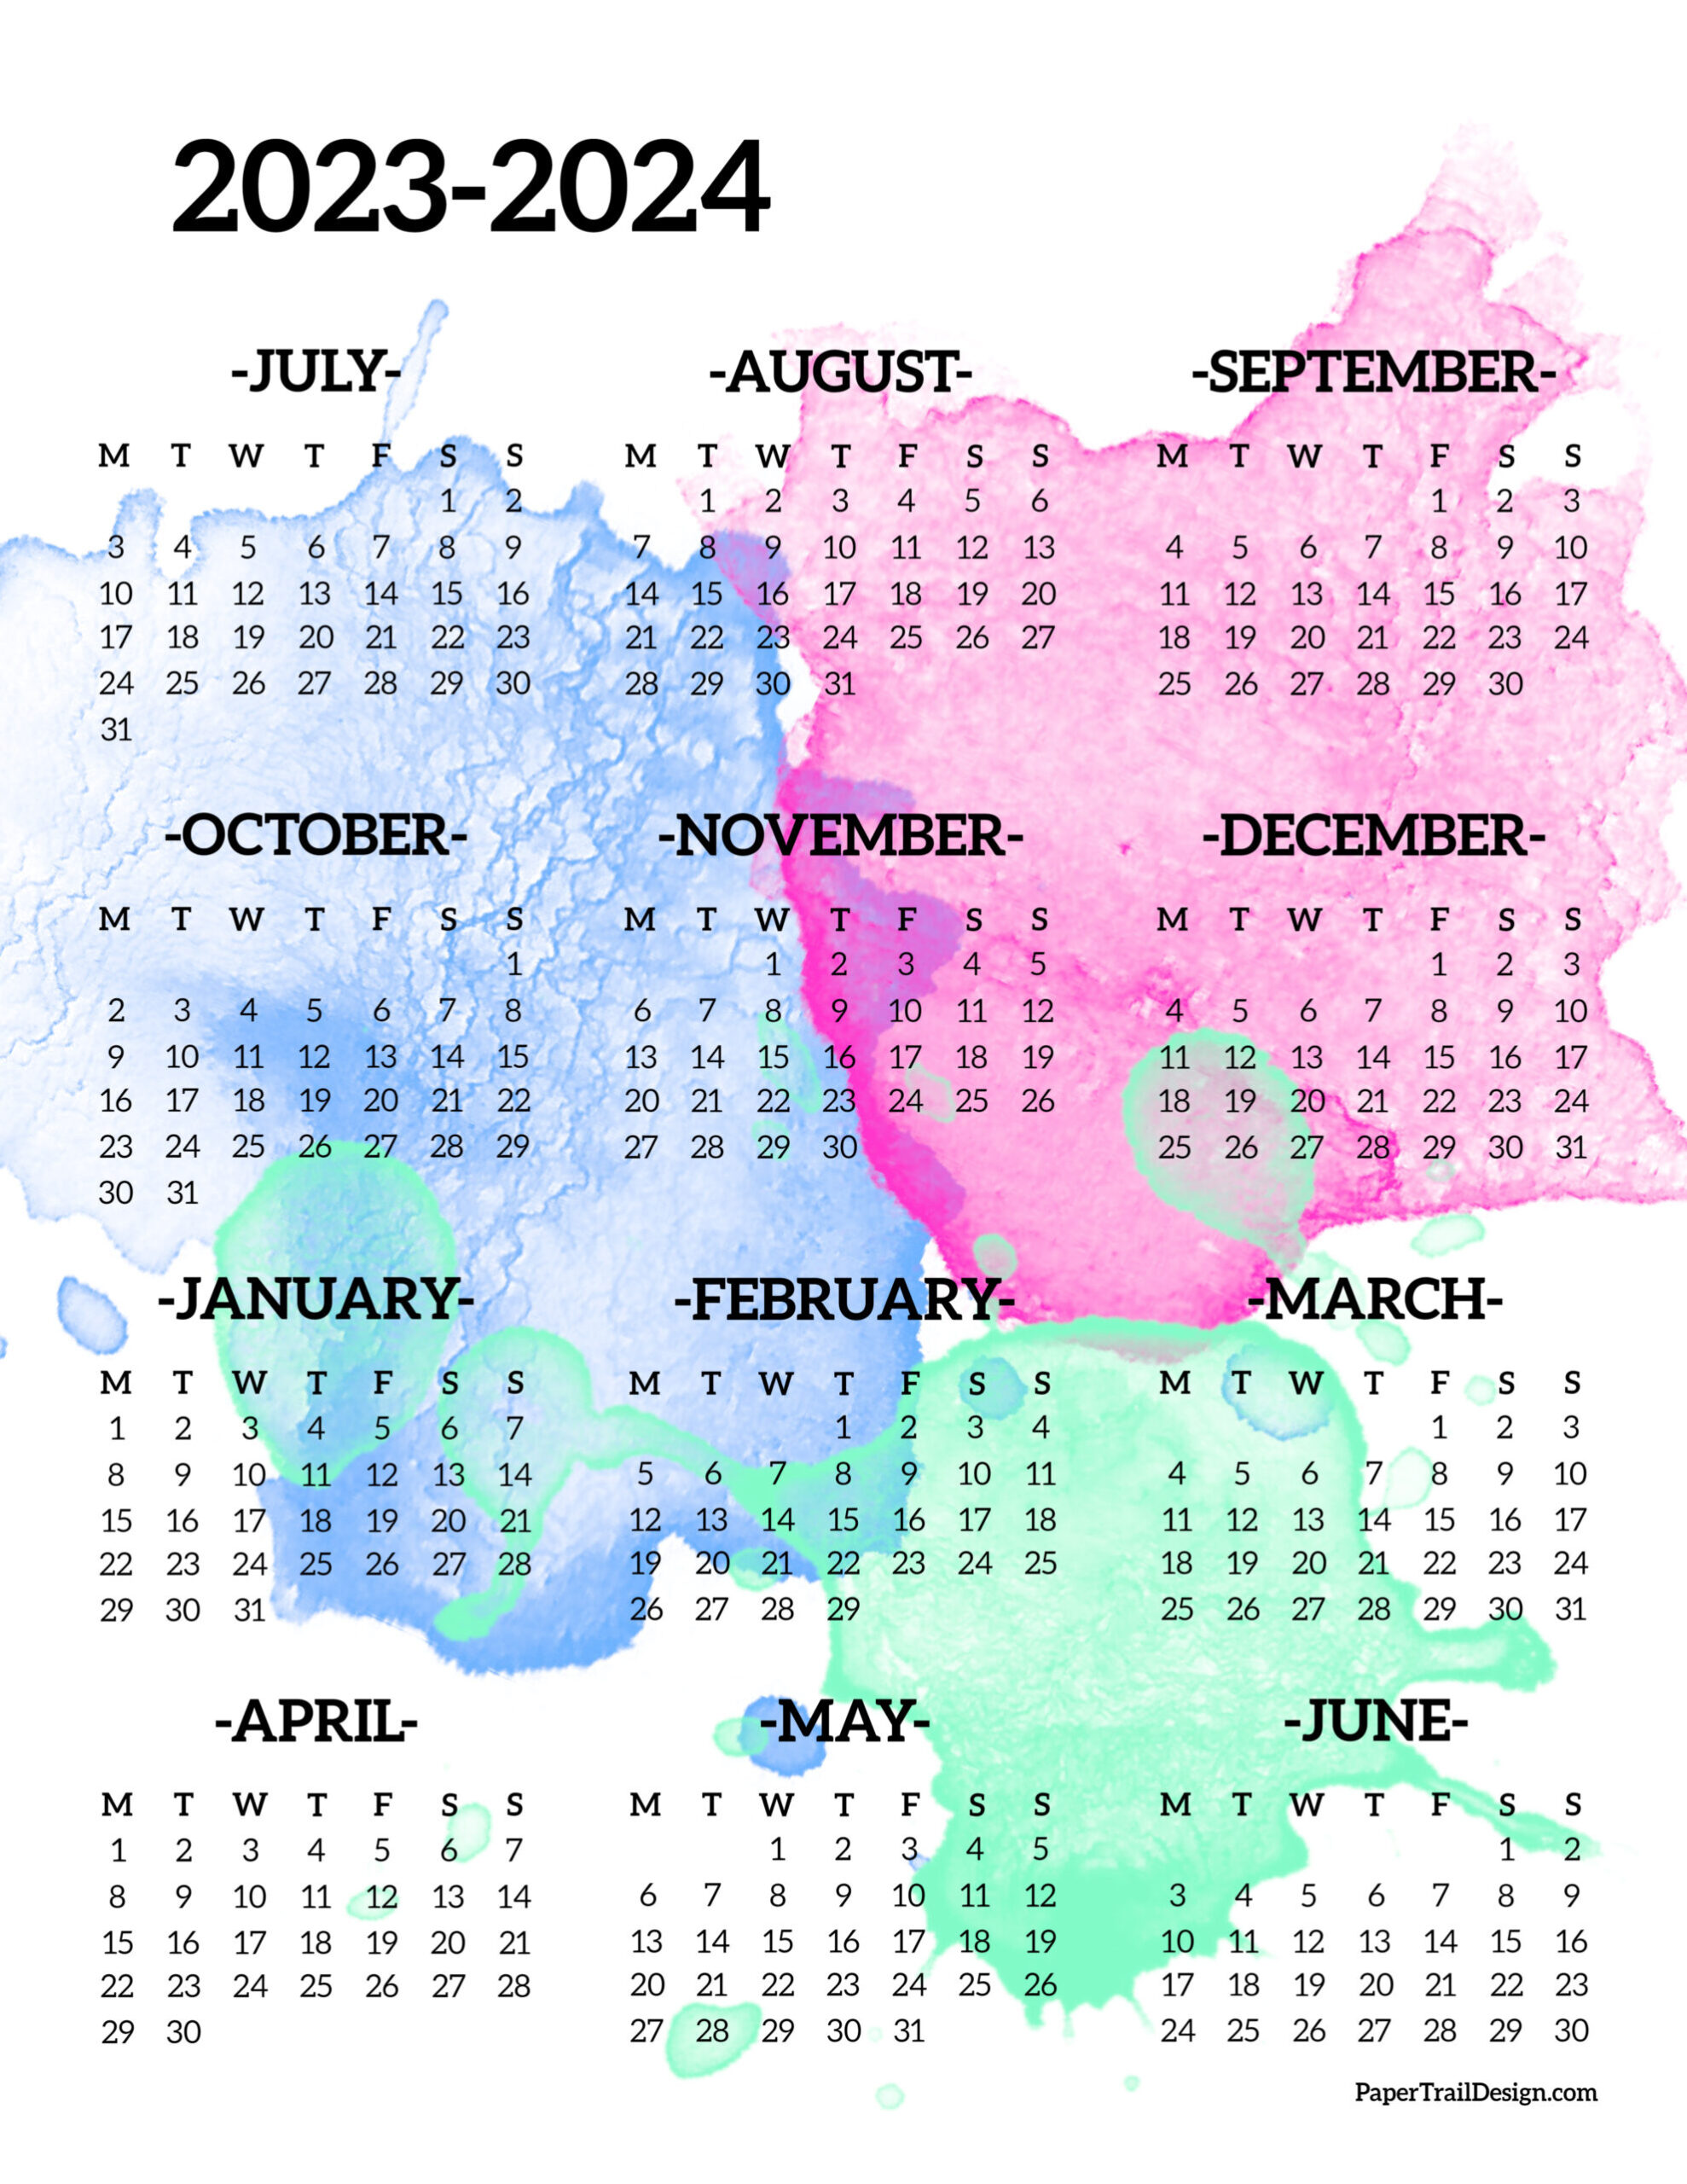 2023-2024 School Year Calendar Free Printable - Paper Trail Design in June 2023 Through May 2024 Calendar